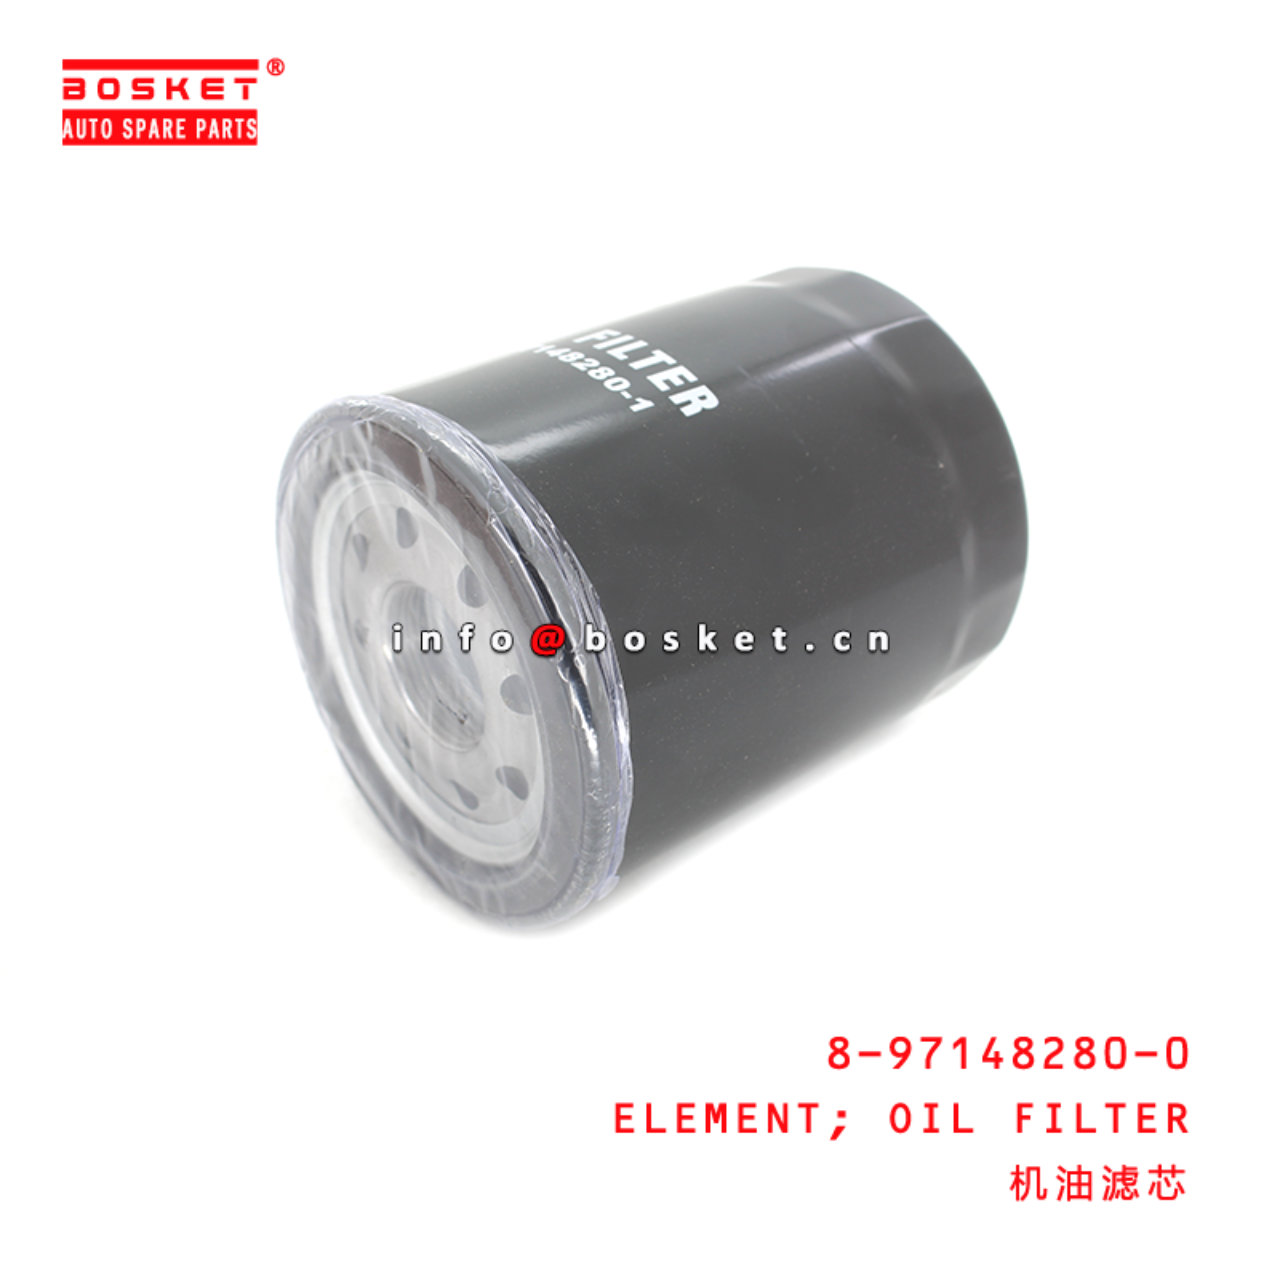 8-97148280-0 Oil Filter Element Suitable for ISUZU...